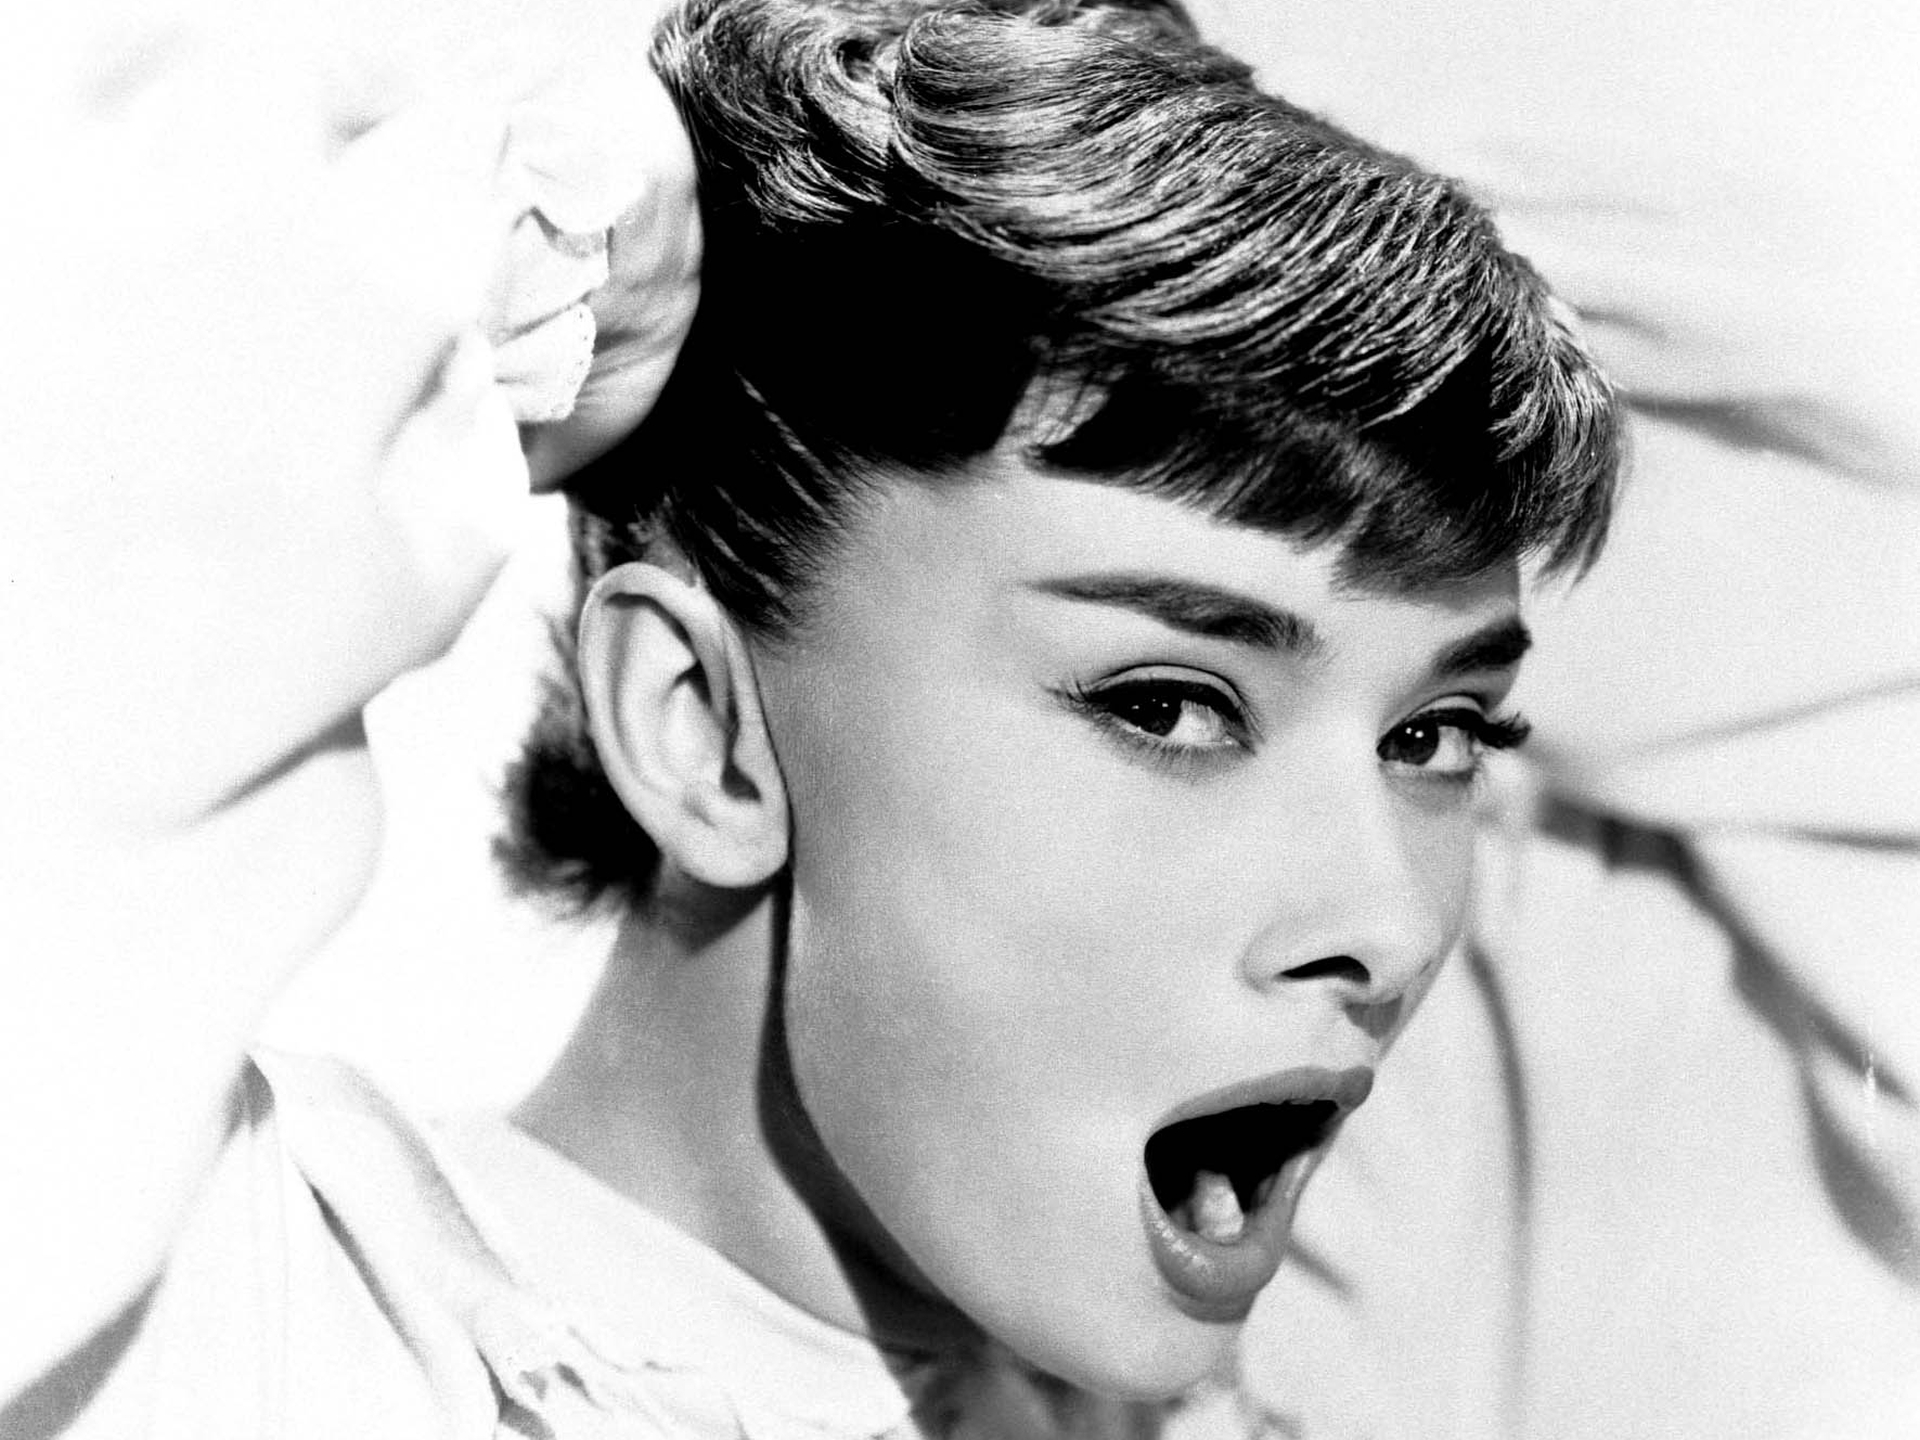 Audrey Hepburn Boy Cut Hairstyles Wallpaper, HD Celebrities 4K Wallpapers,  Images, Photos and Background - Wallpapers Den